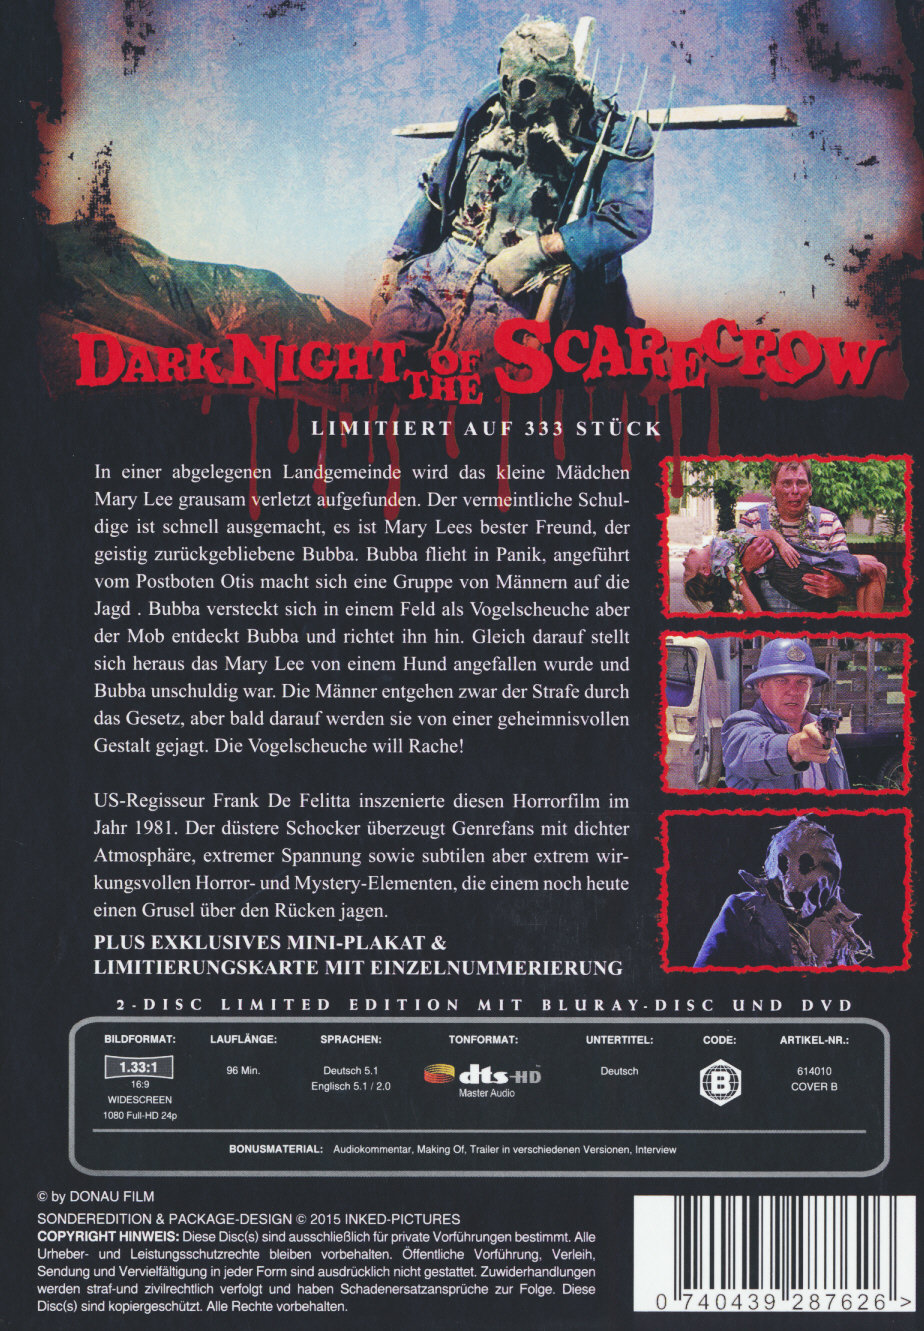 Dark Night of the Scarecrow - Uncut Mediabook Edition (DVD+blu-ray) (B)